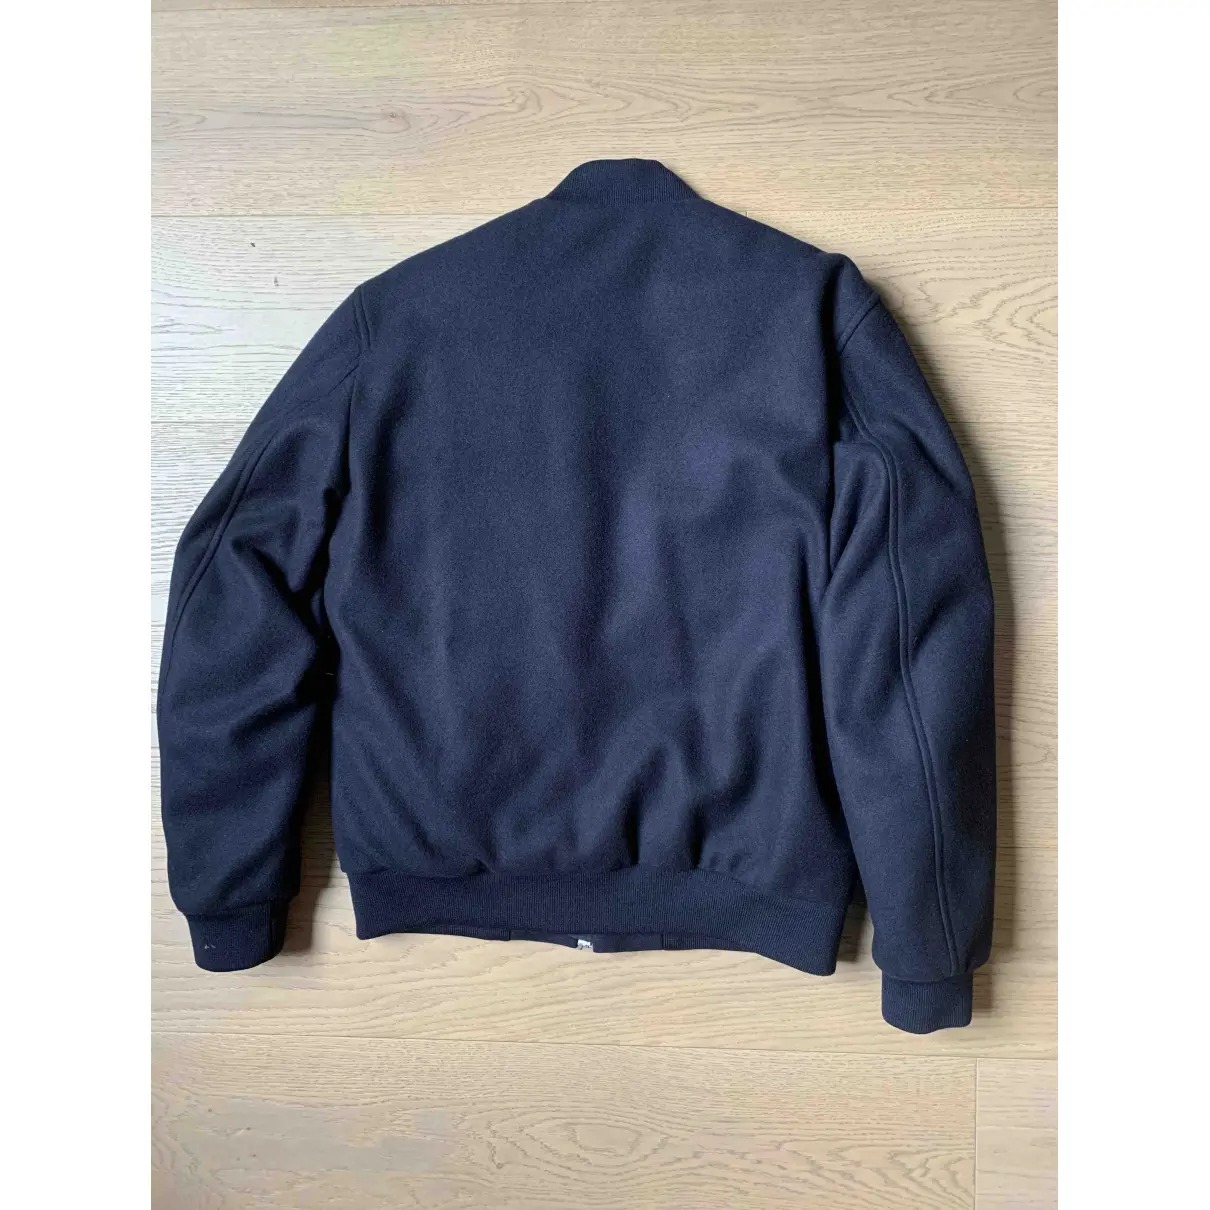 Buy Moncler Wool jacket online